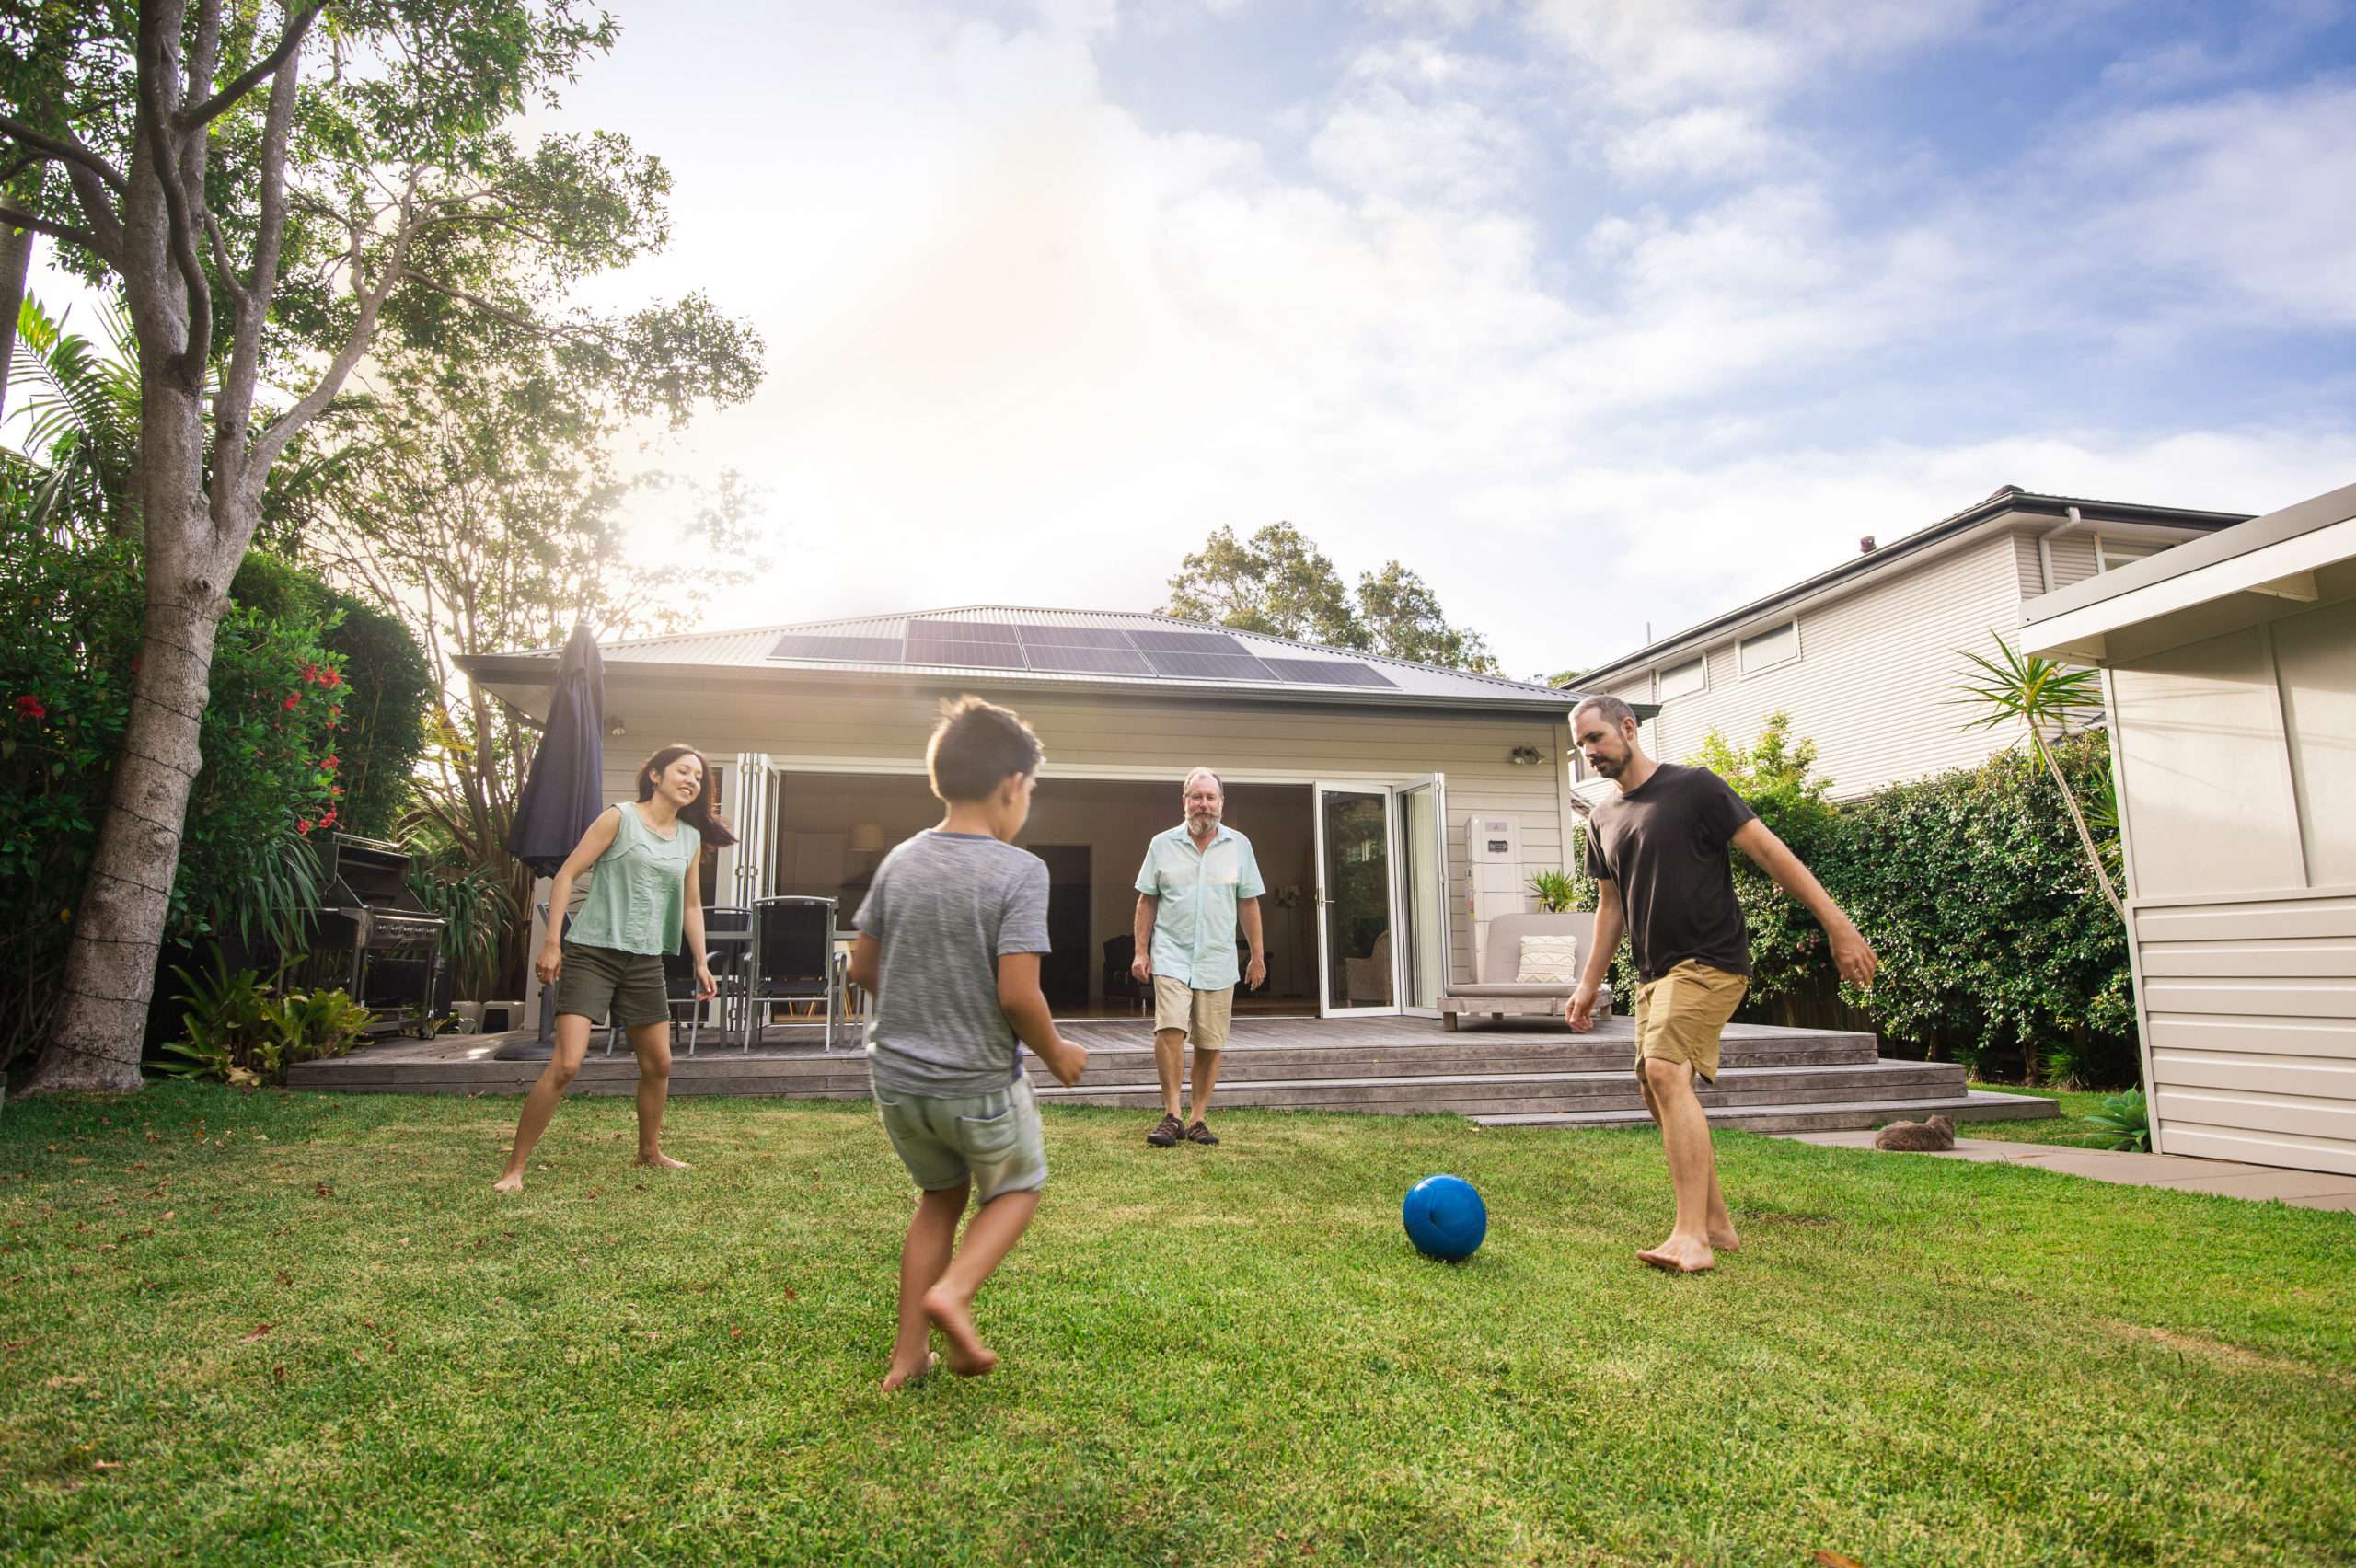 Typical Australian bungalow, family enjoying evening soccer game.